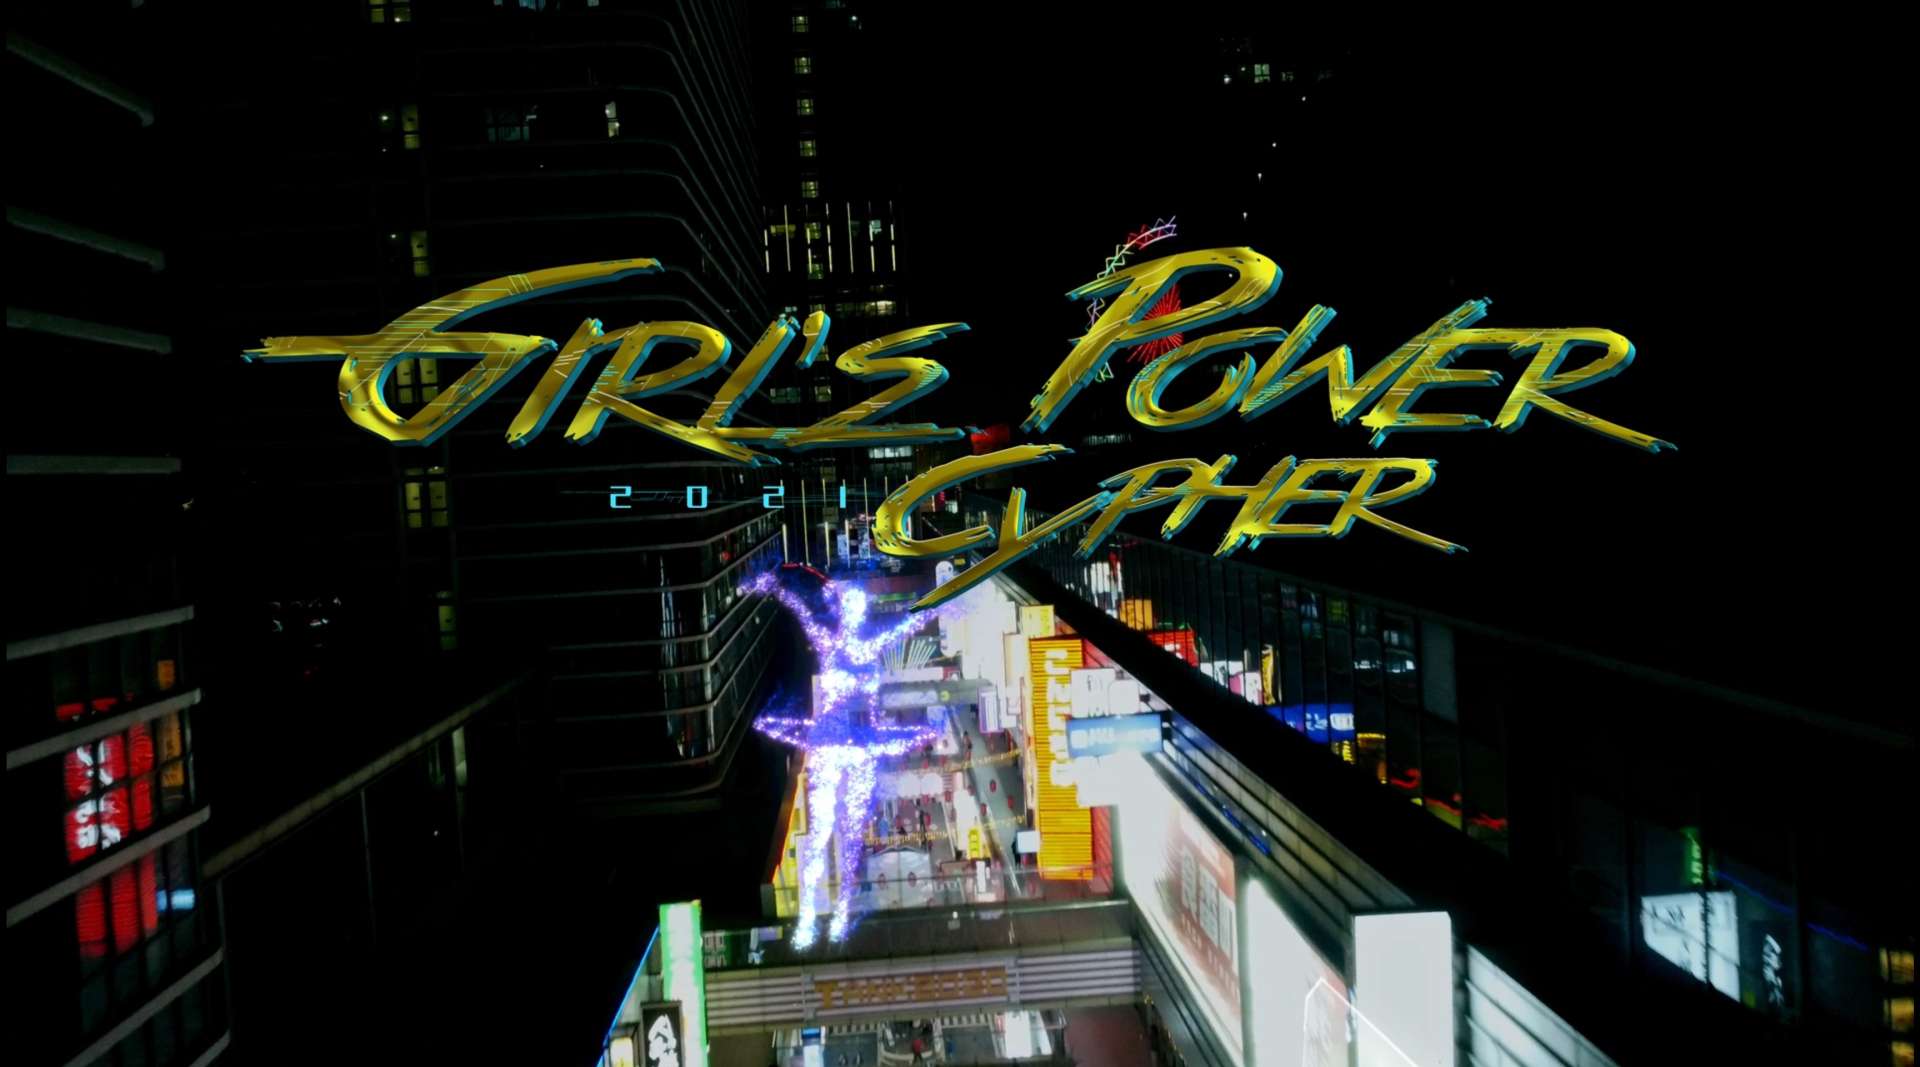 《Girl's Power Cypher》MV